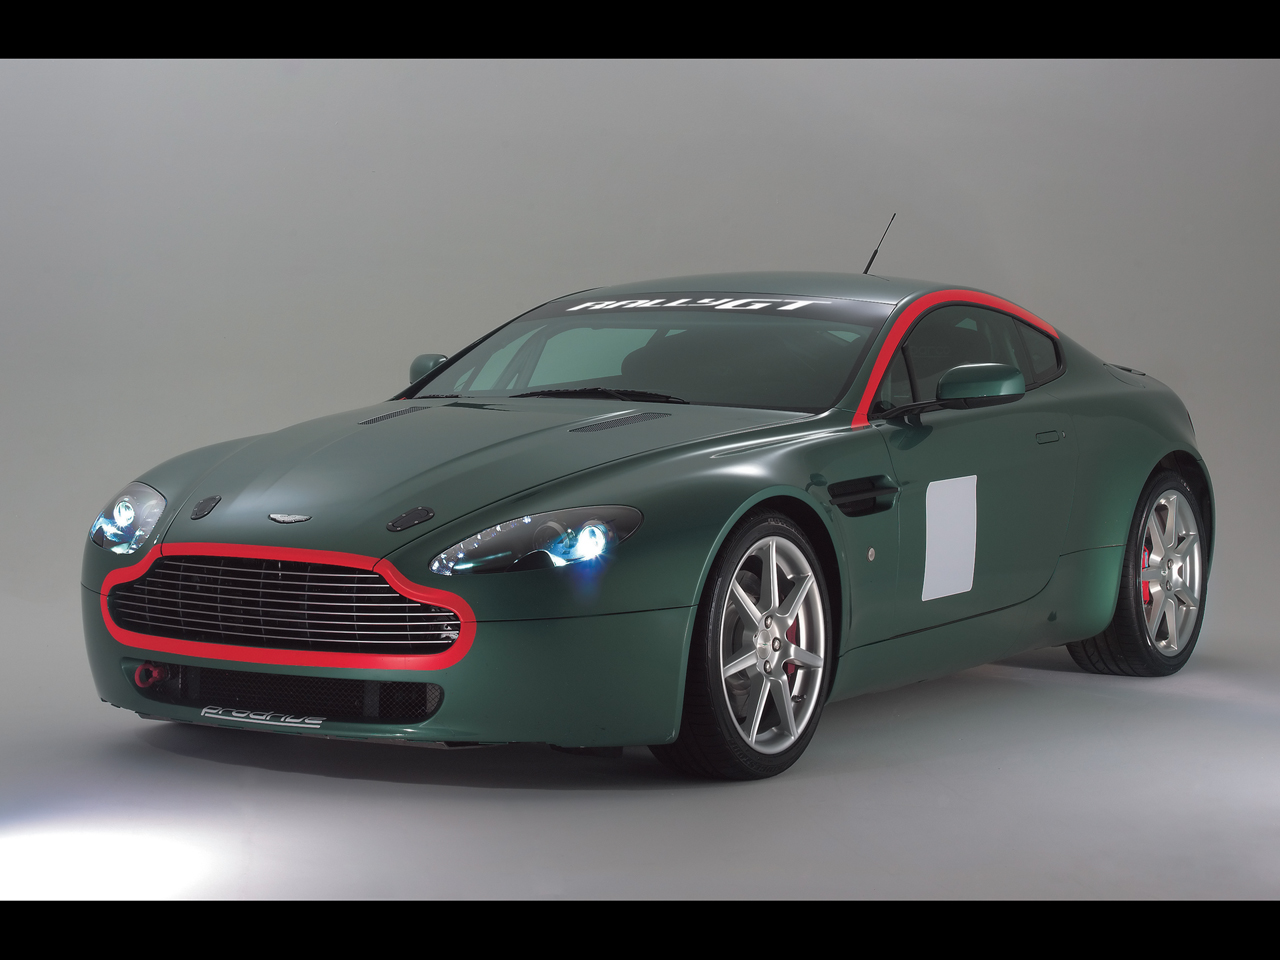 Aston Martin V8 Vantage Rallye Gt